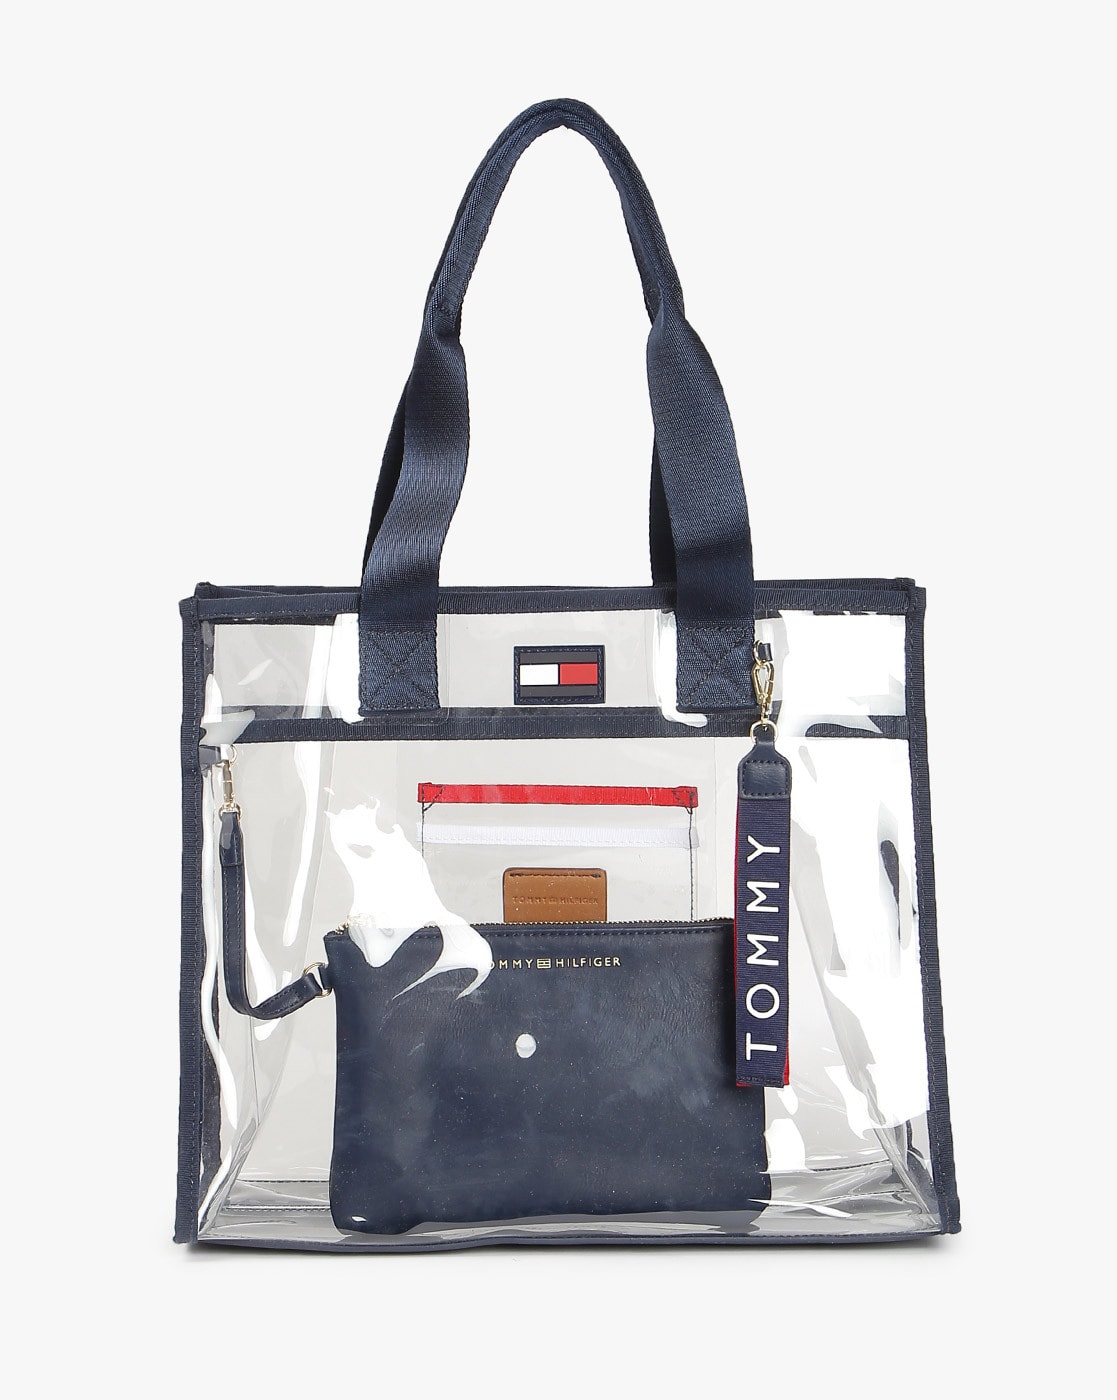 Designer Inspired Clear Bags  ClearHandbagscom